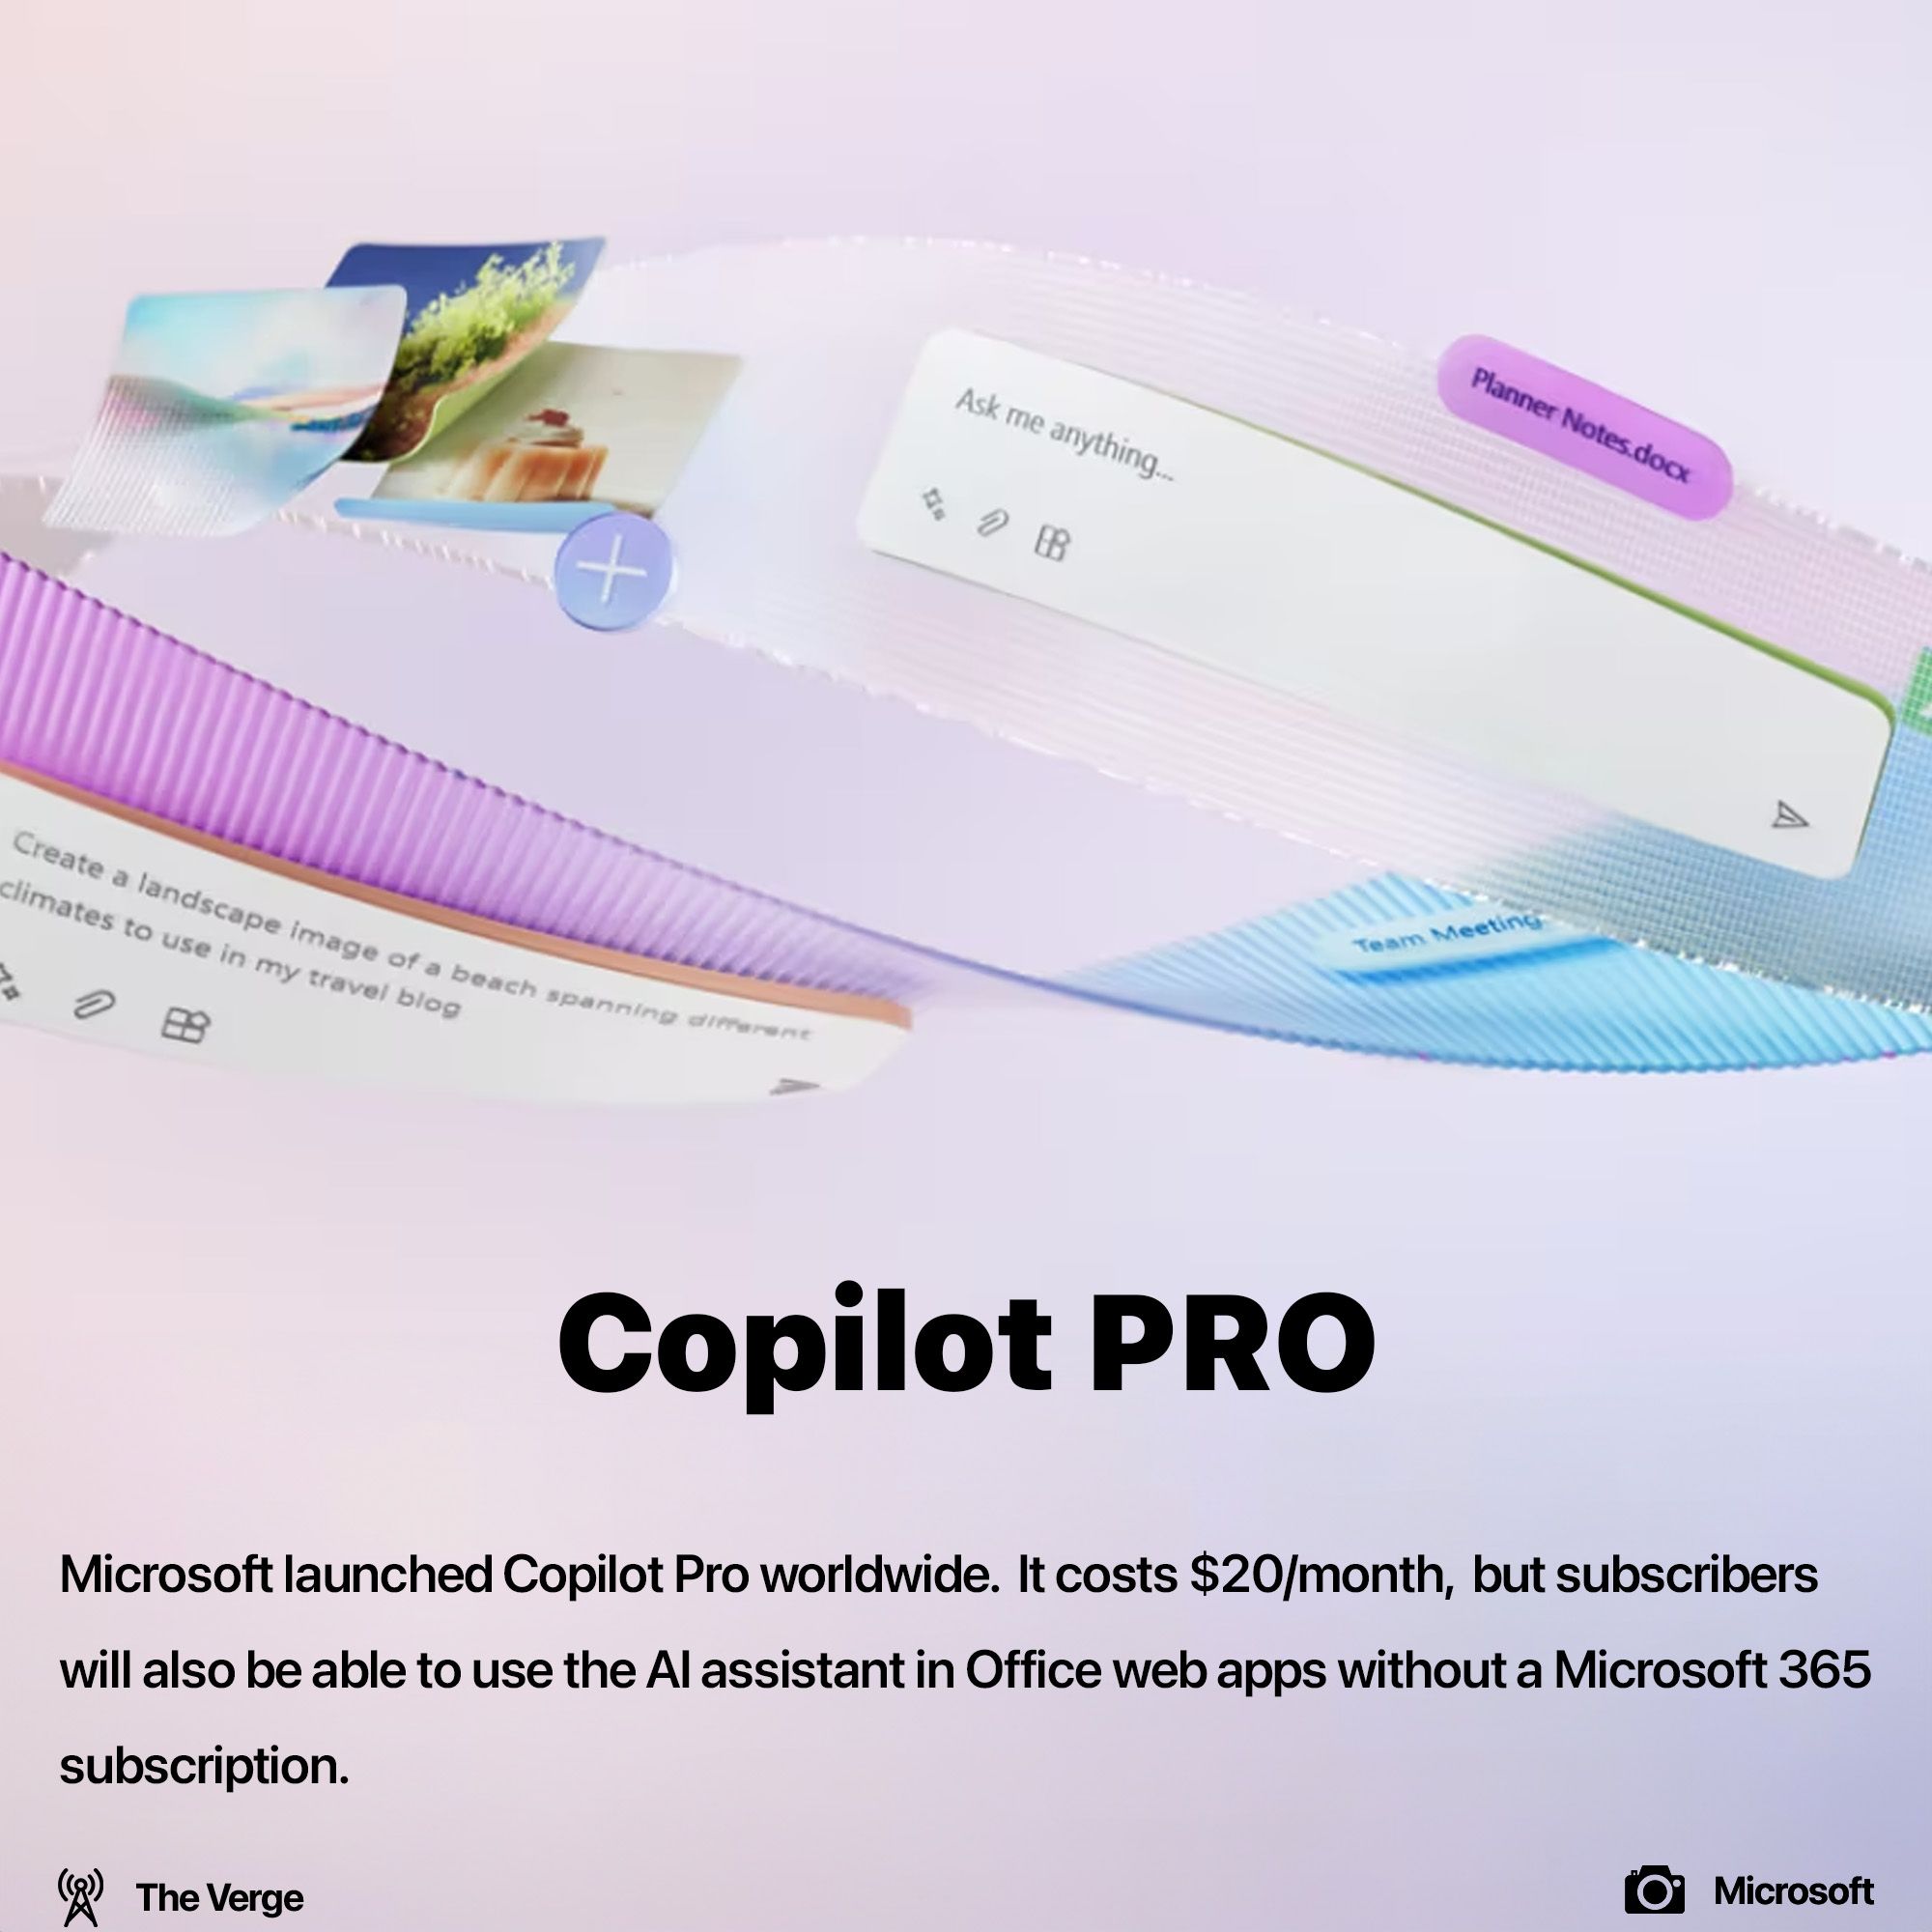 Microsoft launched Copilot PRO